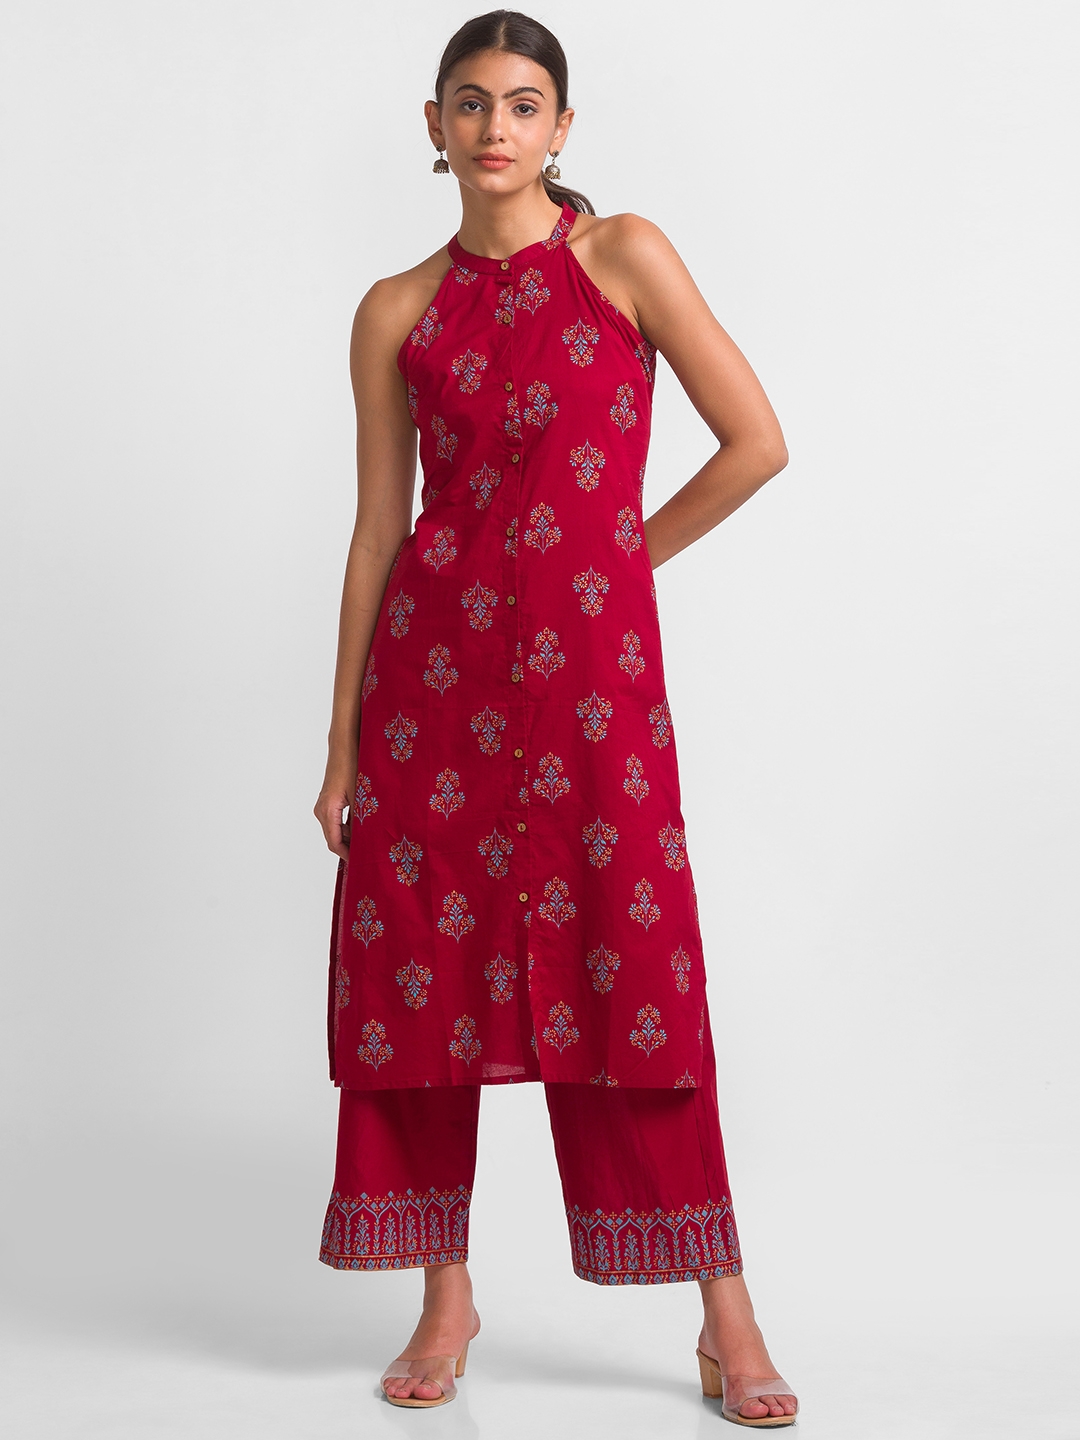 globus | Women's Red Cotton Printed Kurta & Pants 0